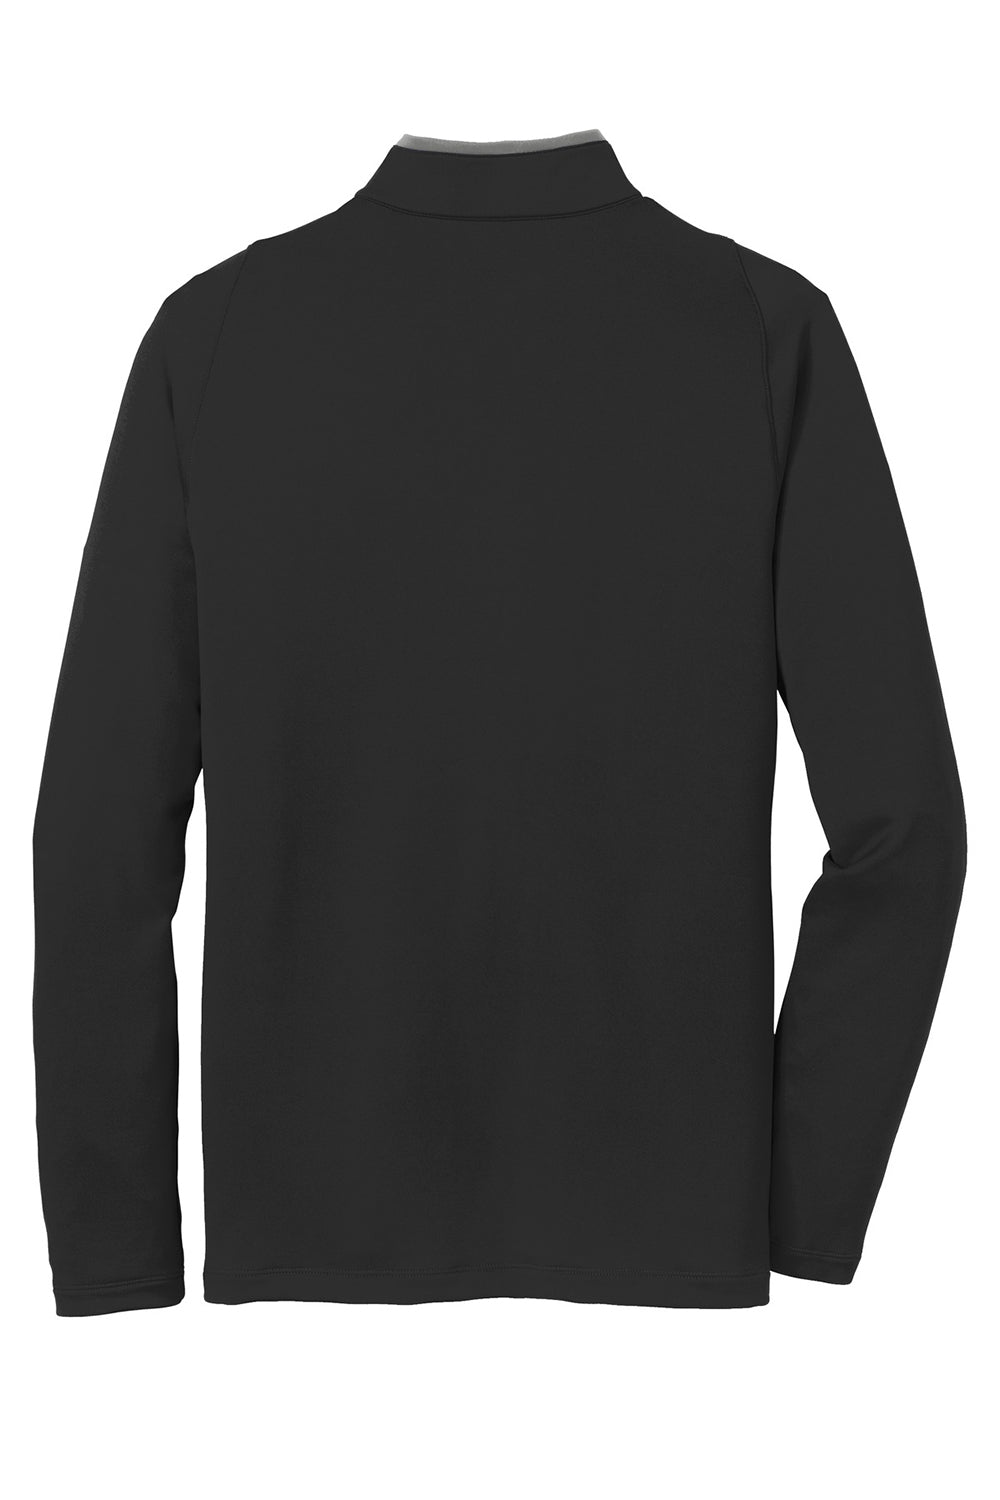 Nike 779795 Mens Dri-Fit Moisture Wicking 1/4 Zip Sweatshirt Black/Dark Grey/Red Flat Back